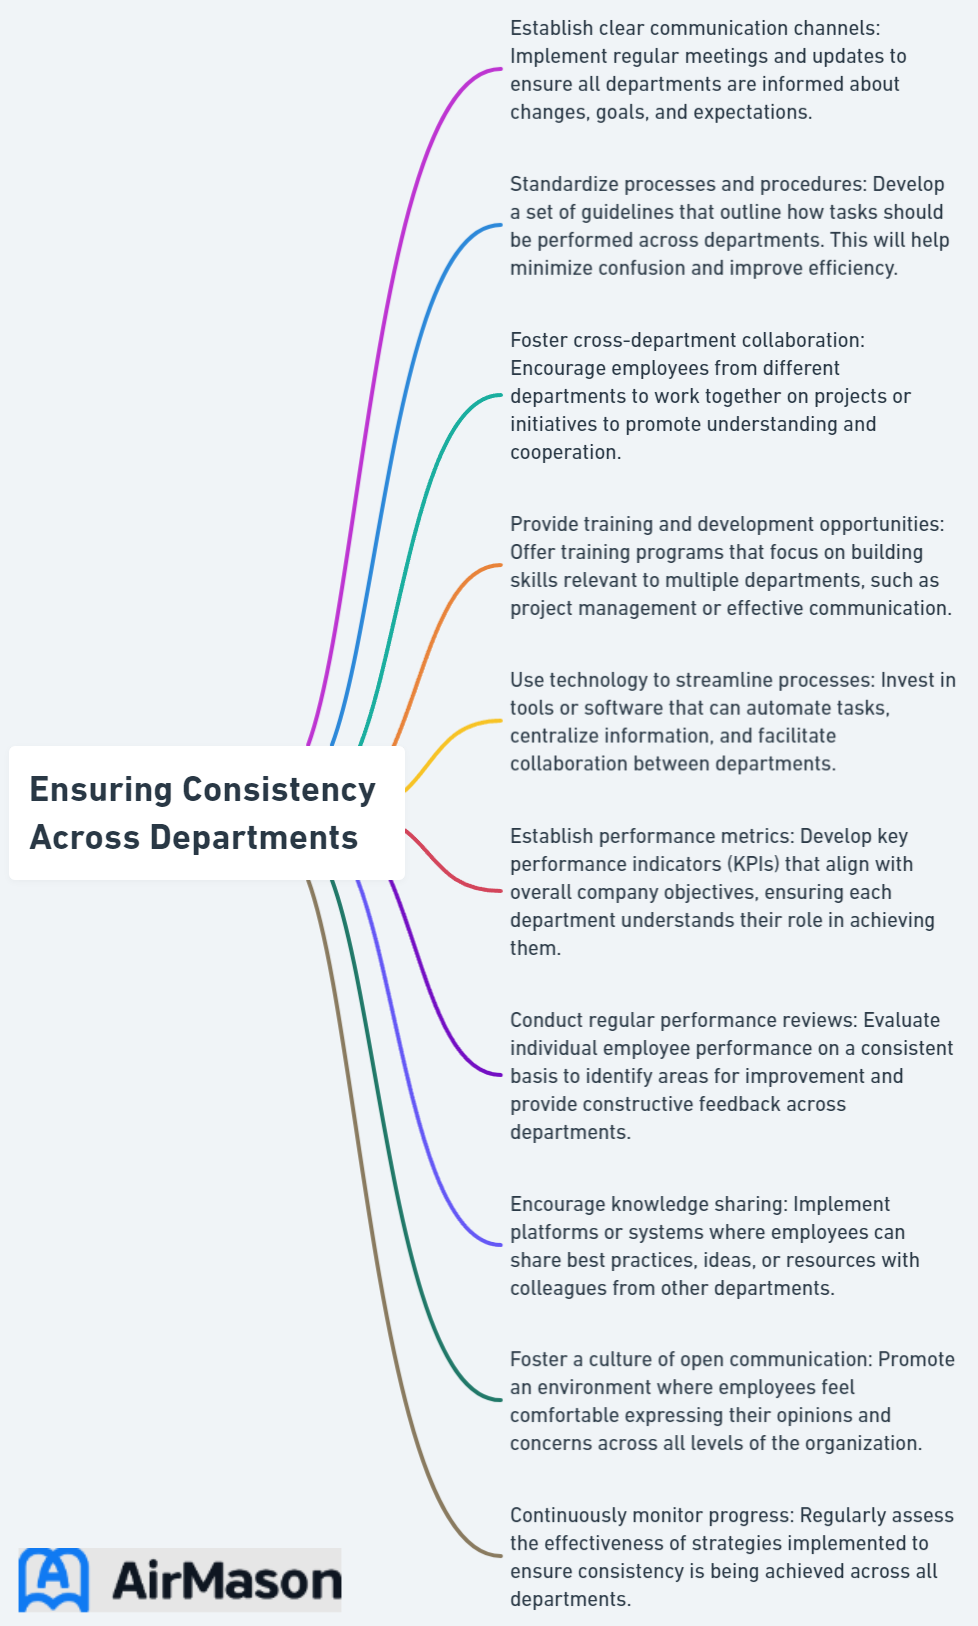 Ensuring Consistency Across Departments